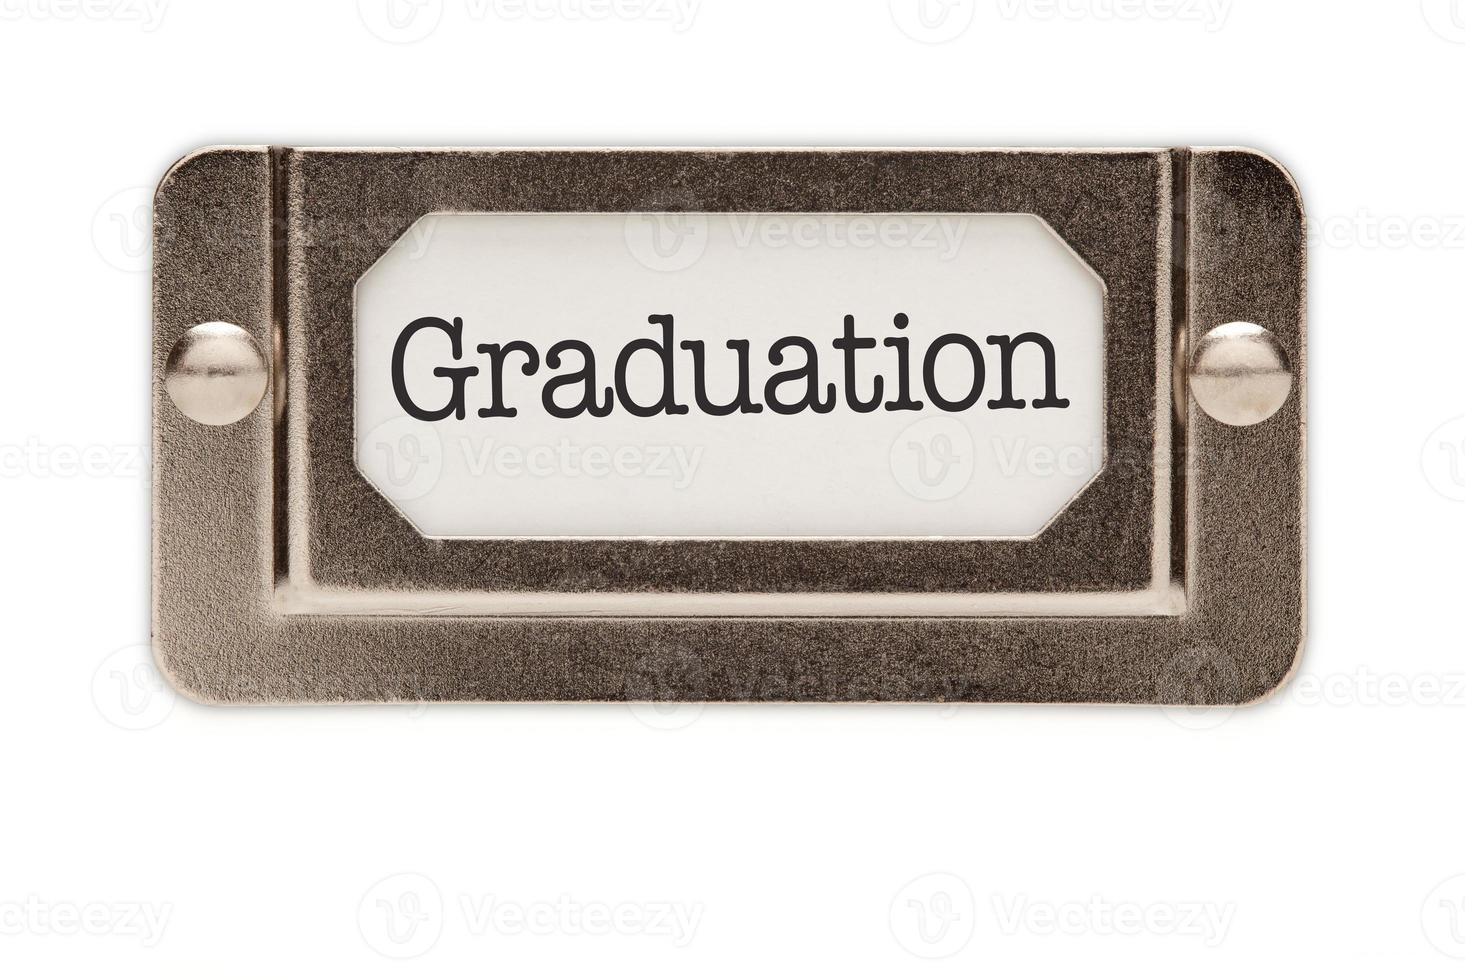 Graduation File Drawer Label photo